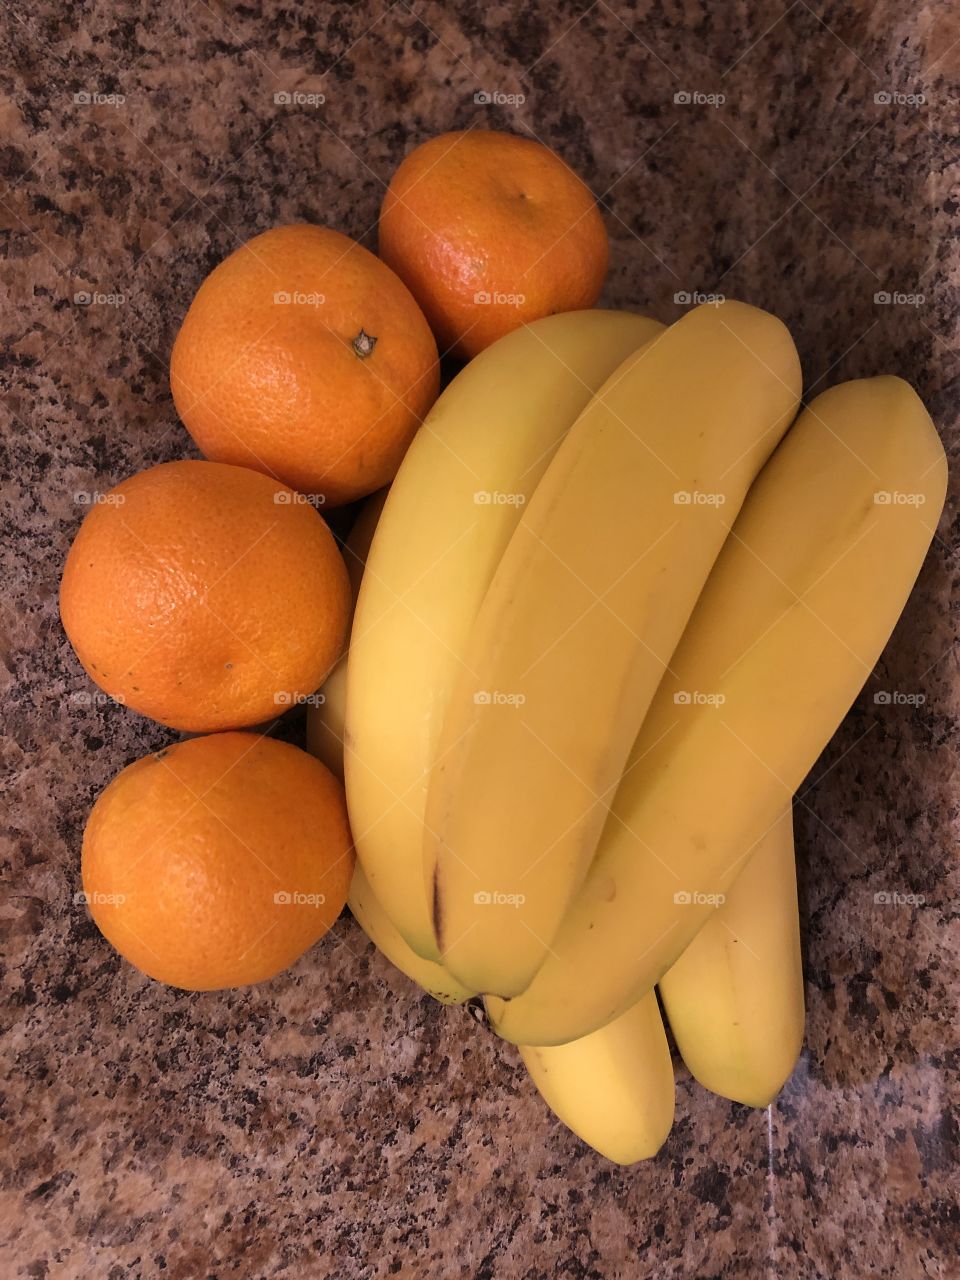 Orange banana 